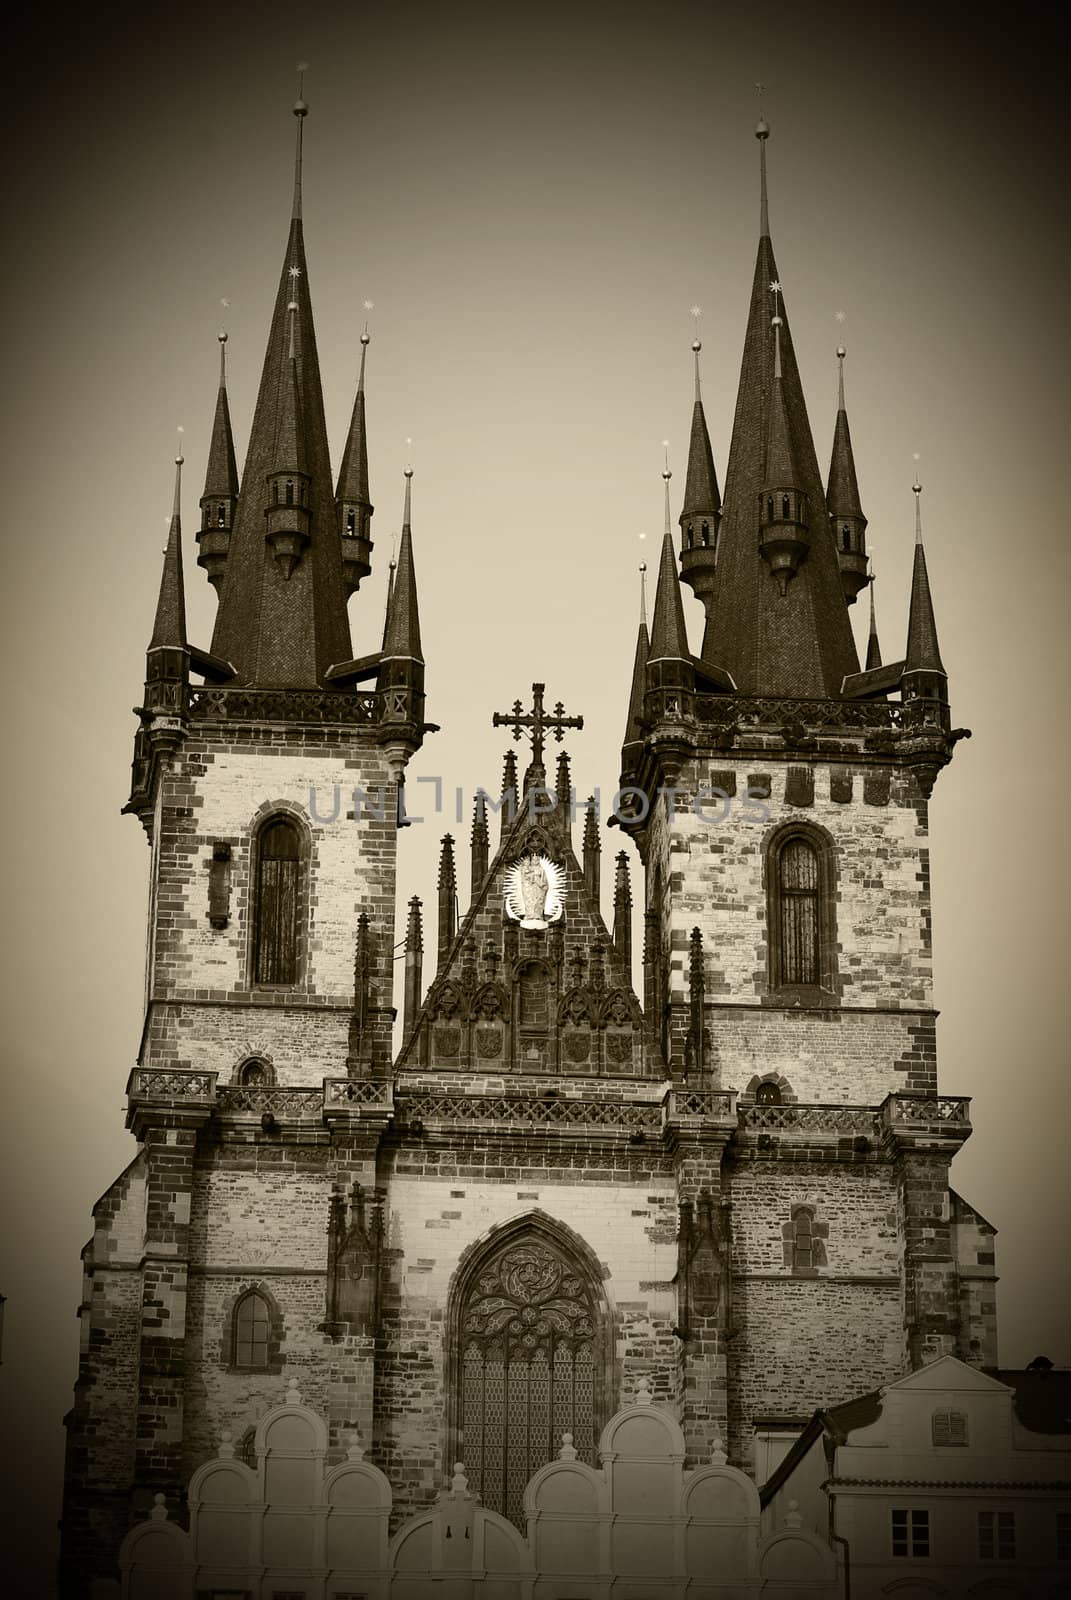 Church of lady before Tyn, Prague